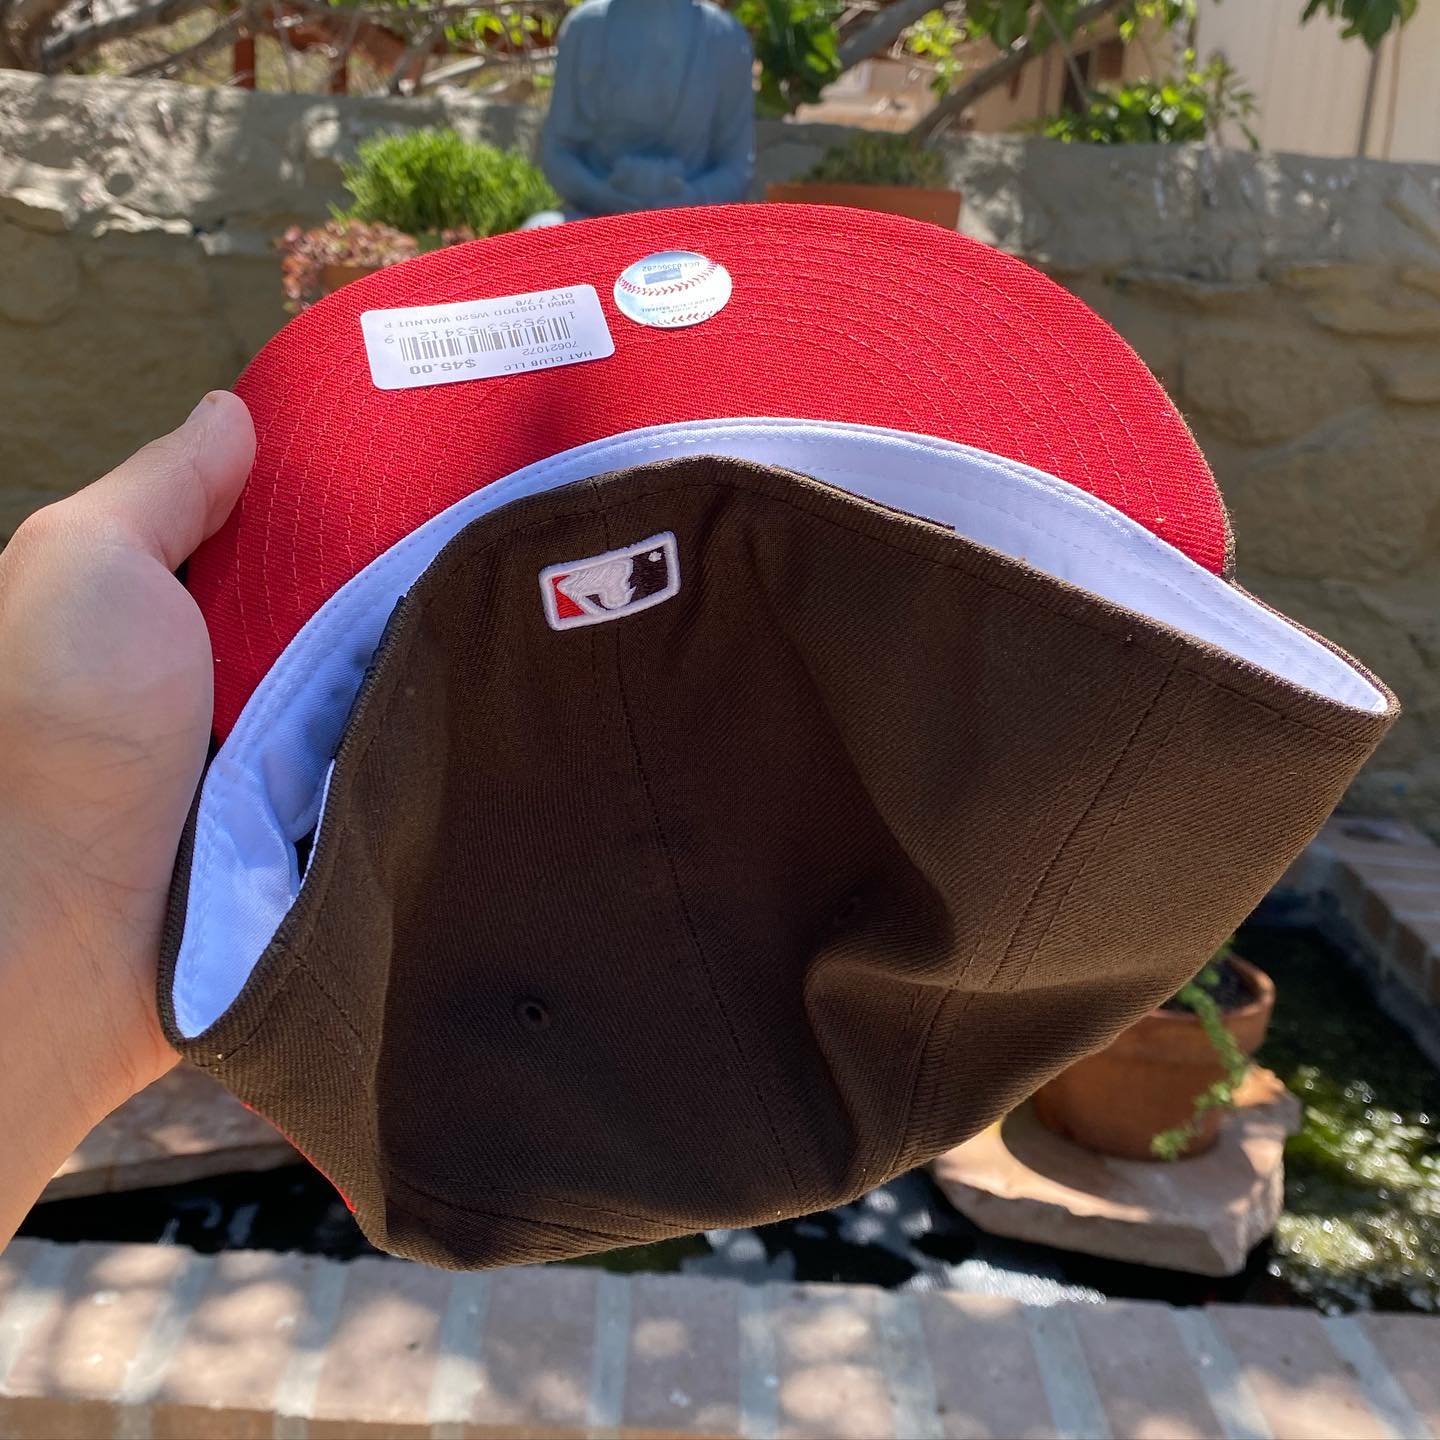 Red LA Dodgers Hats